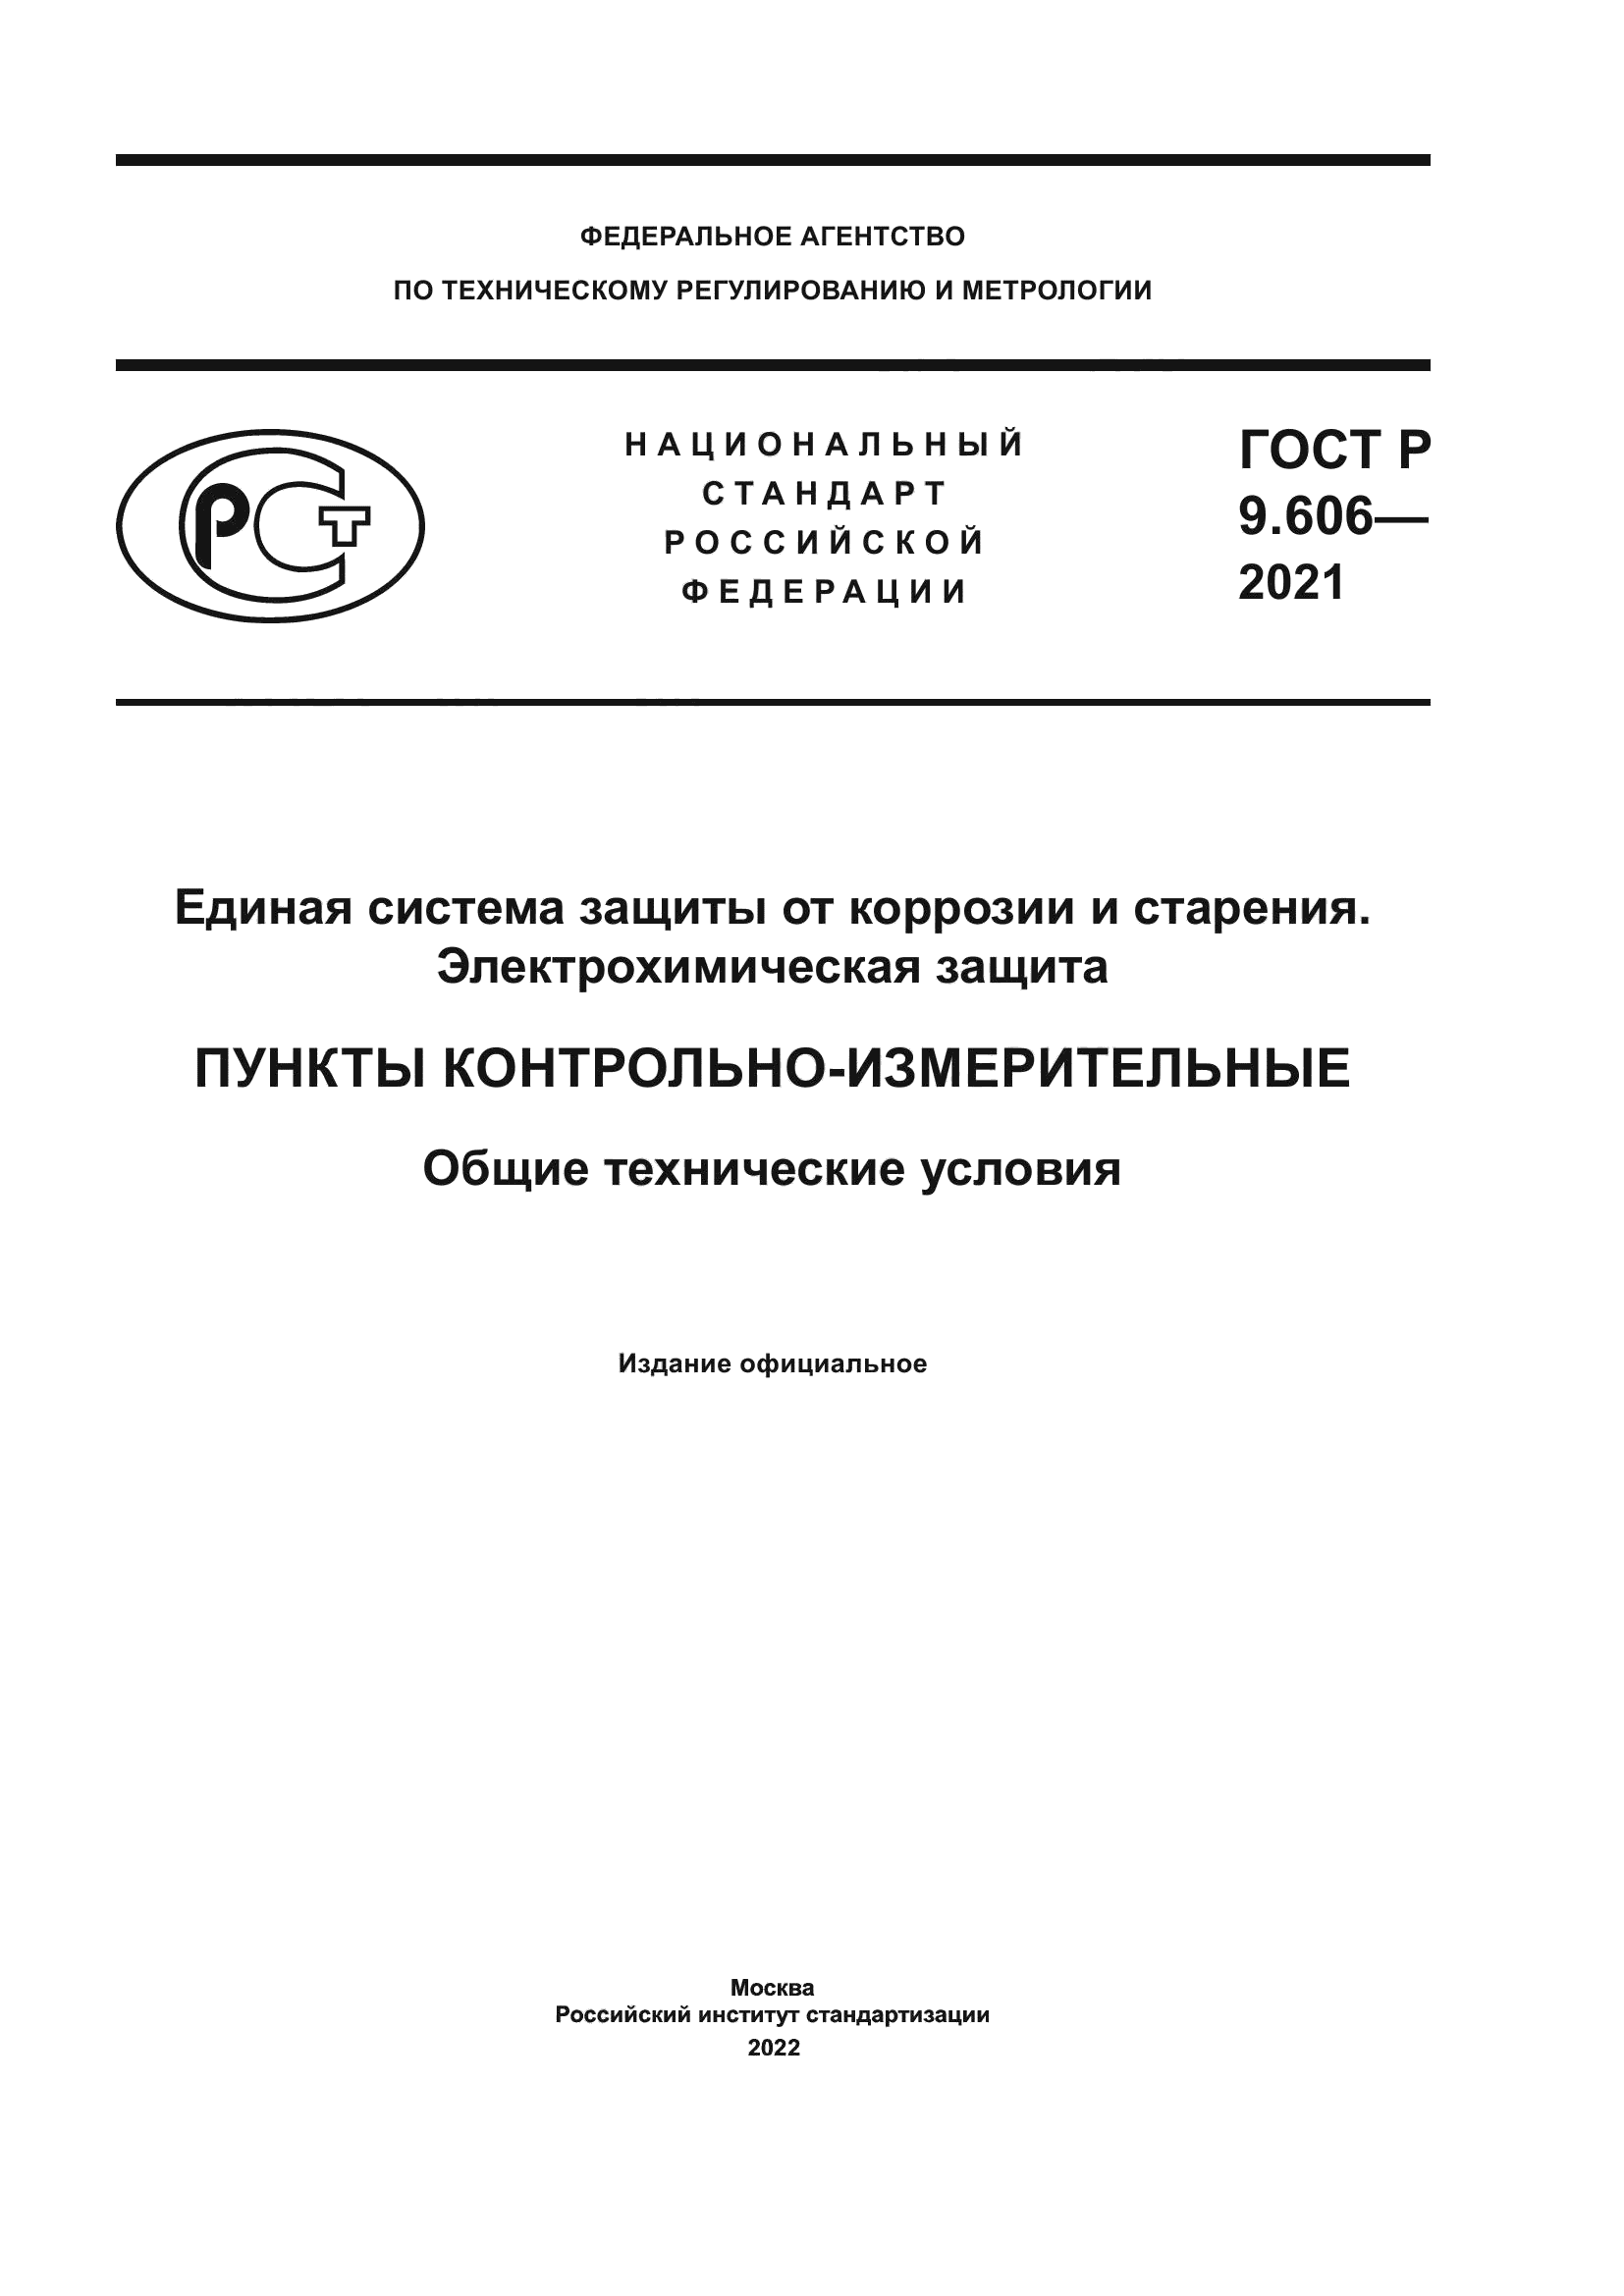 ГОСТ Р 9.606-2021